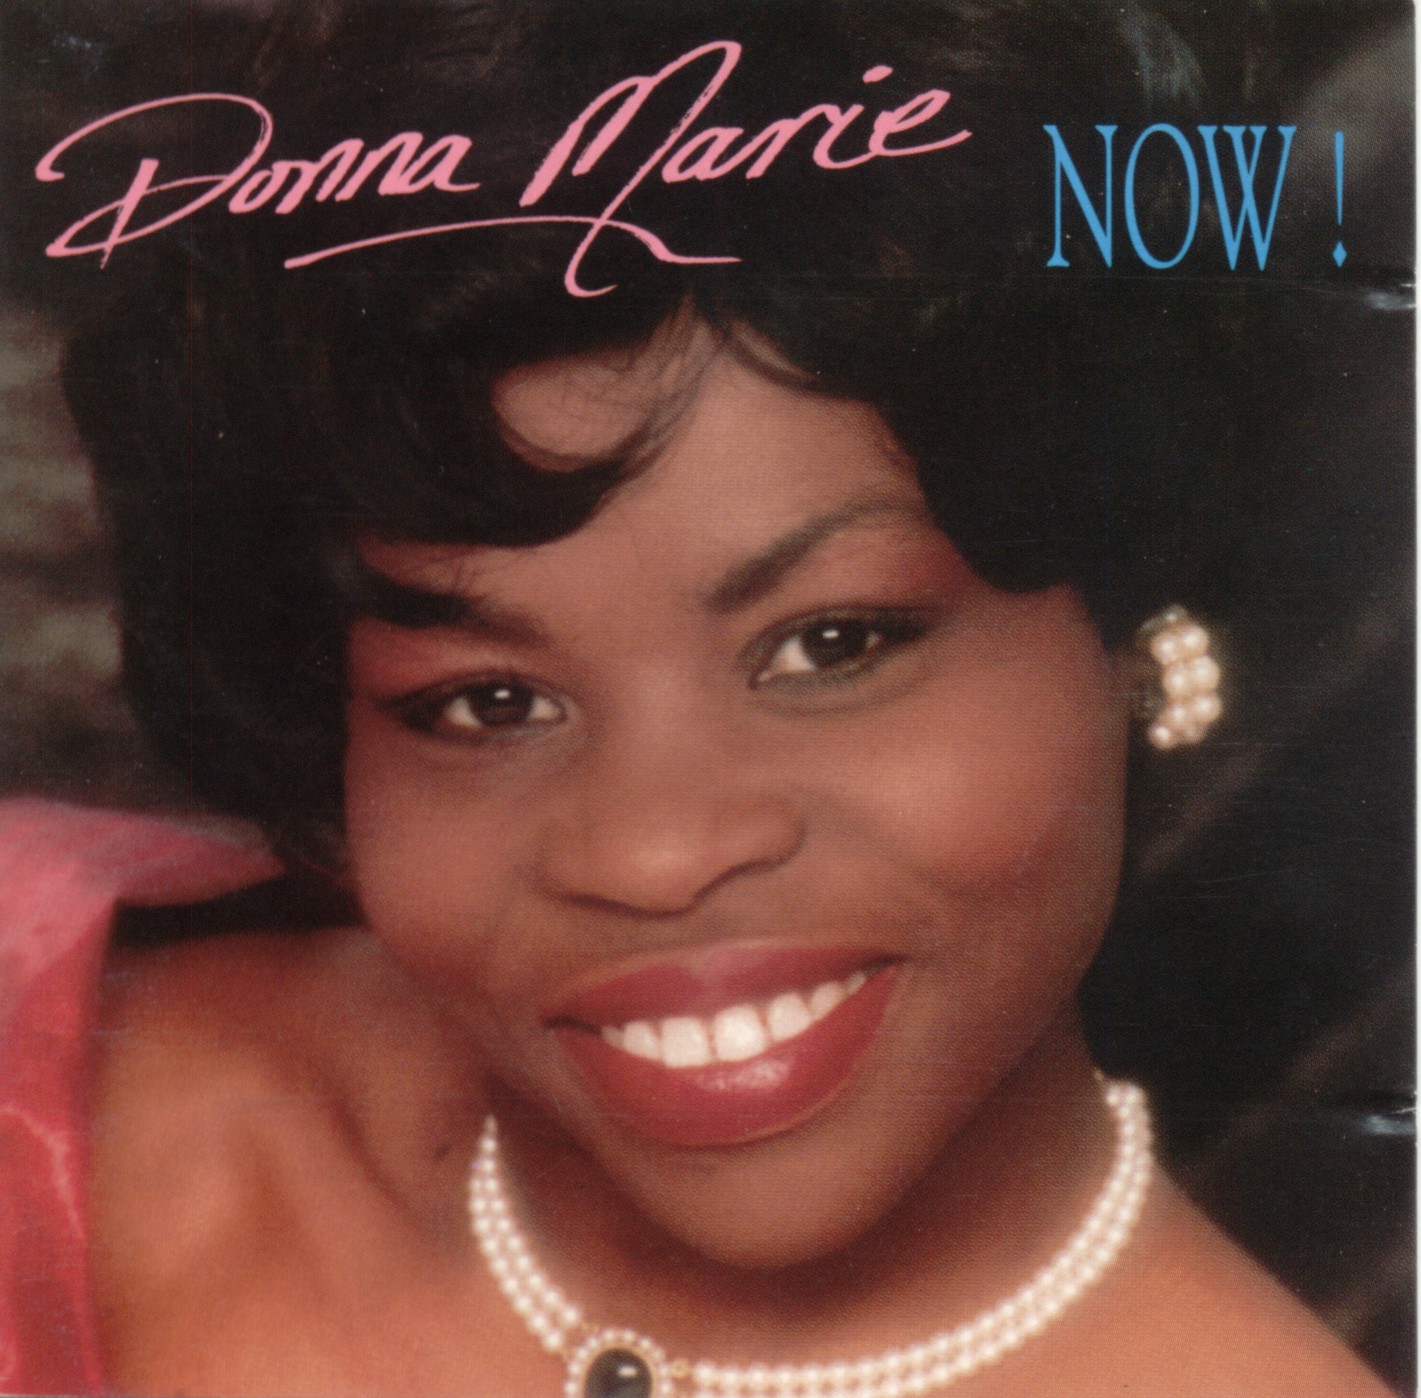 Maria wishes she. Donna Marie. Донна Мари фото. Donna Marie 1987. Donna Marie Smallworth.